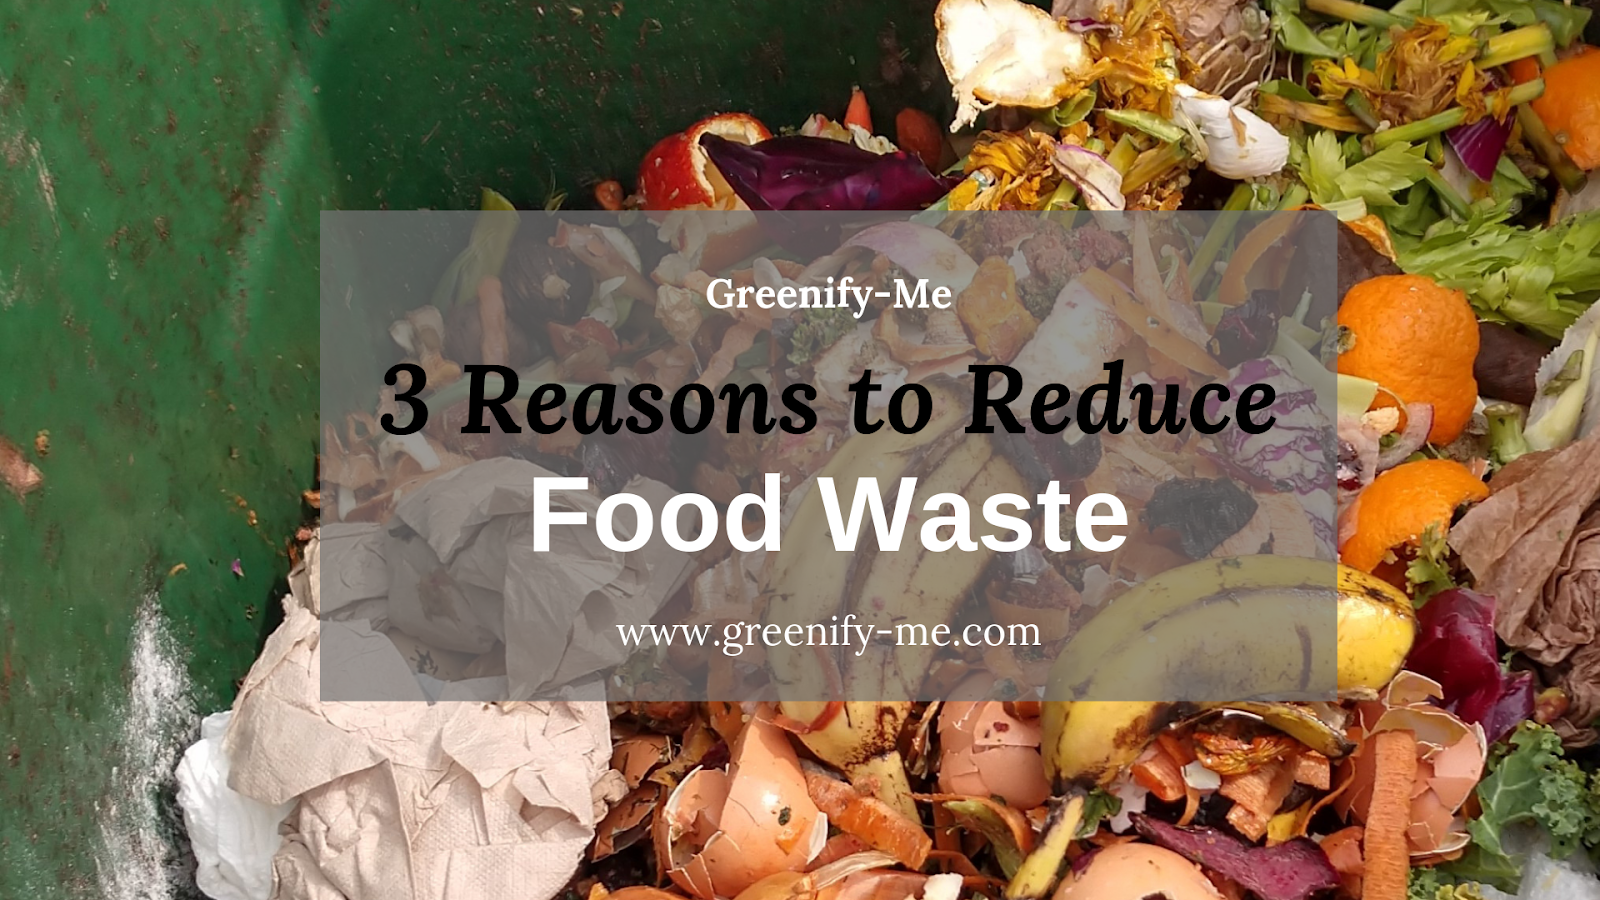 reduce food waste